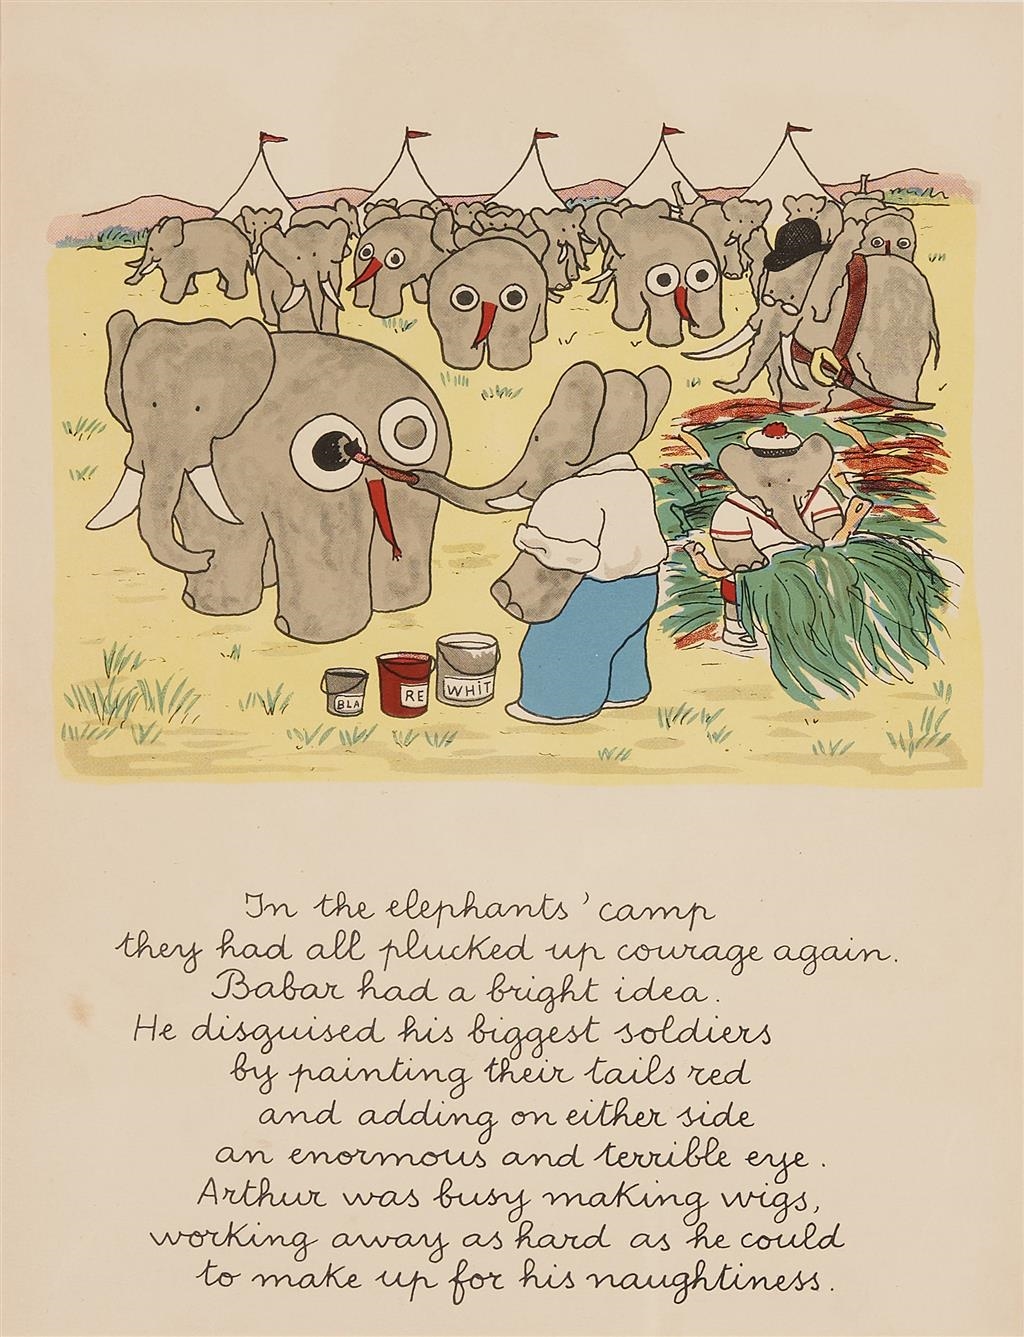 Babar The Elephant by Jean de Brunhoff, circa1930s